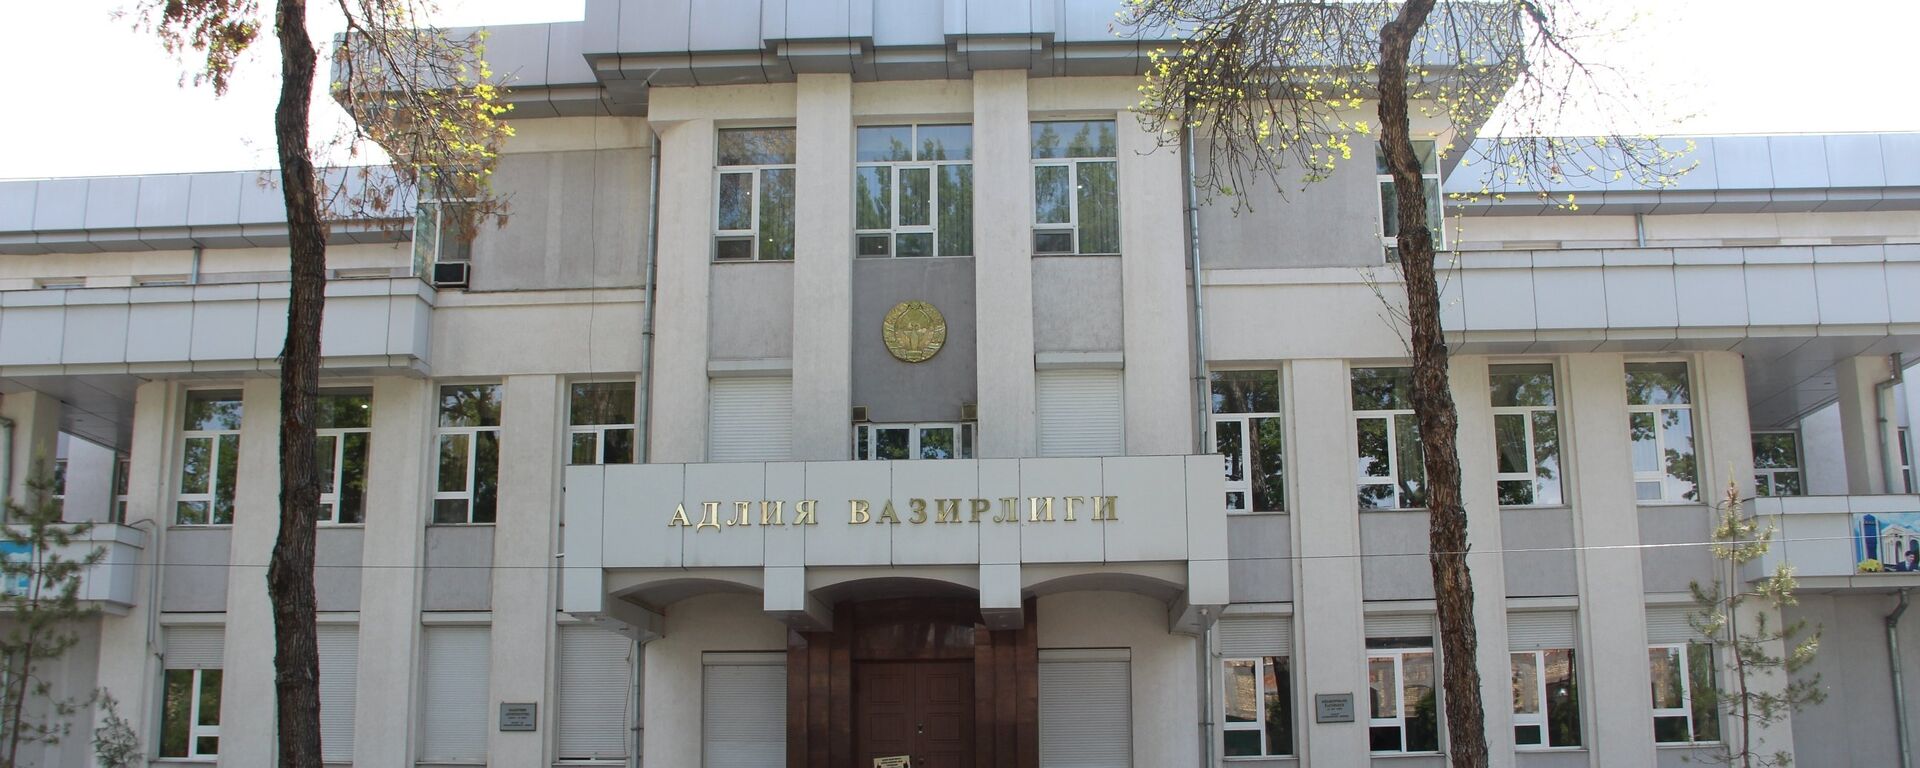 Здание Министерства юстиции Узбекистана - Sputnik Ўзбекистон, 1920, 11.02.2021